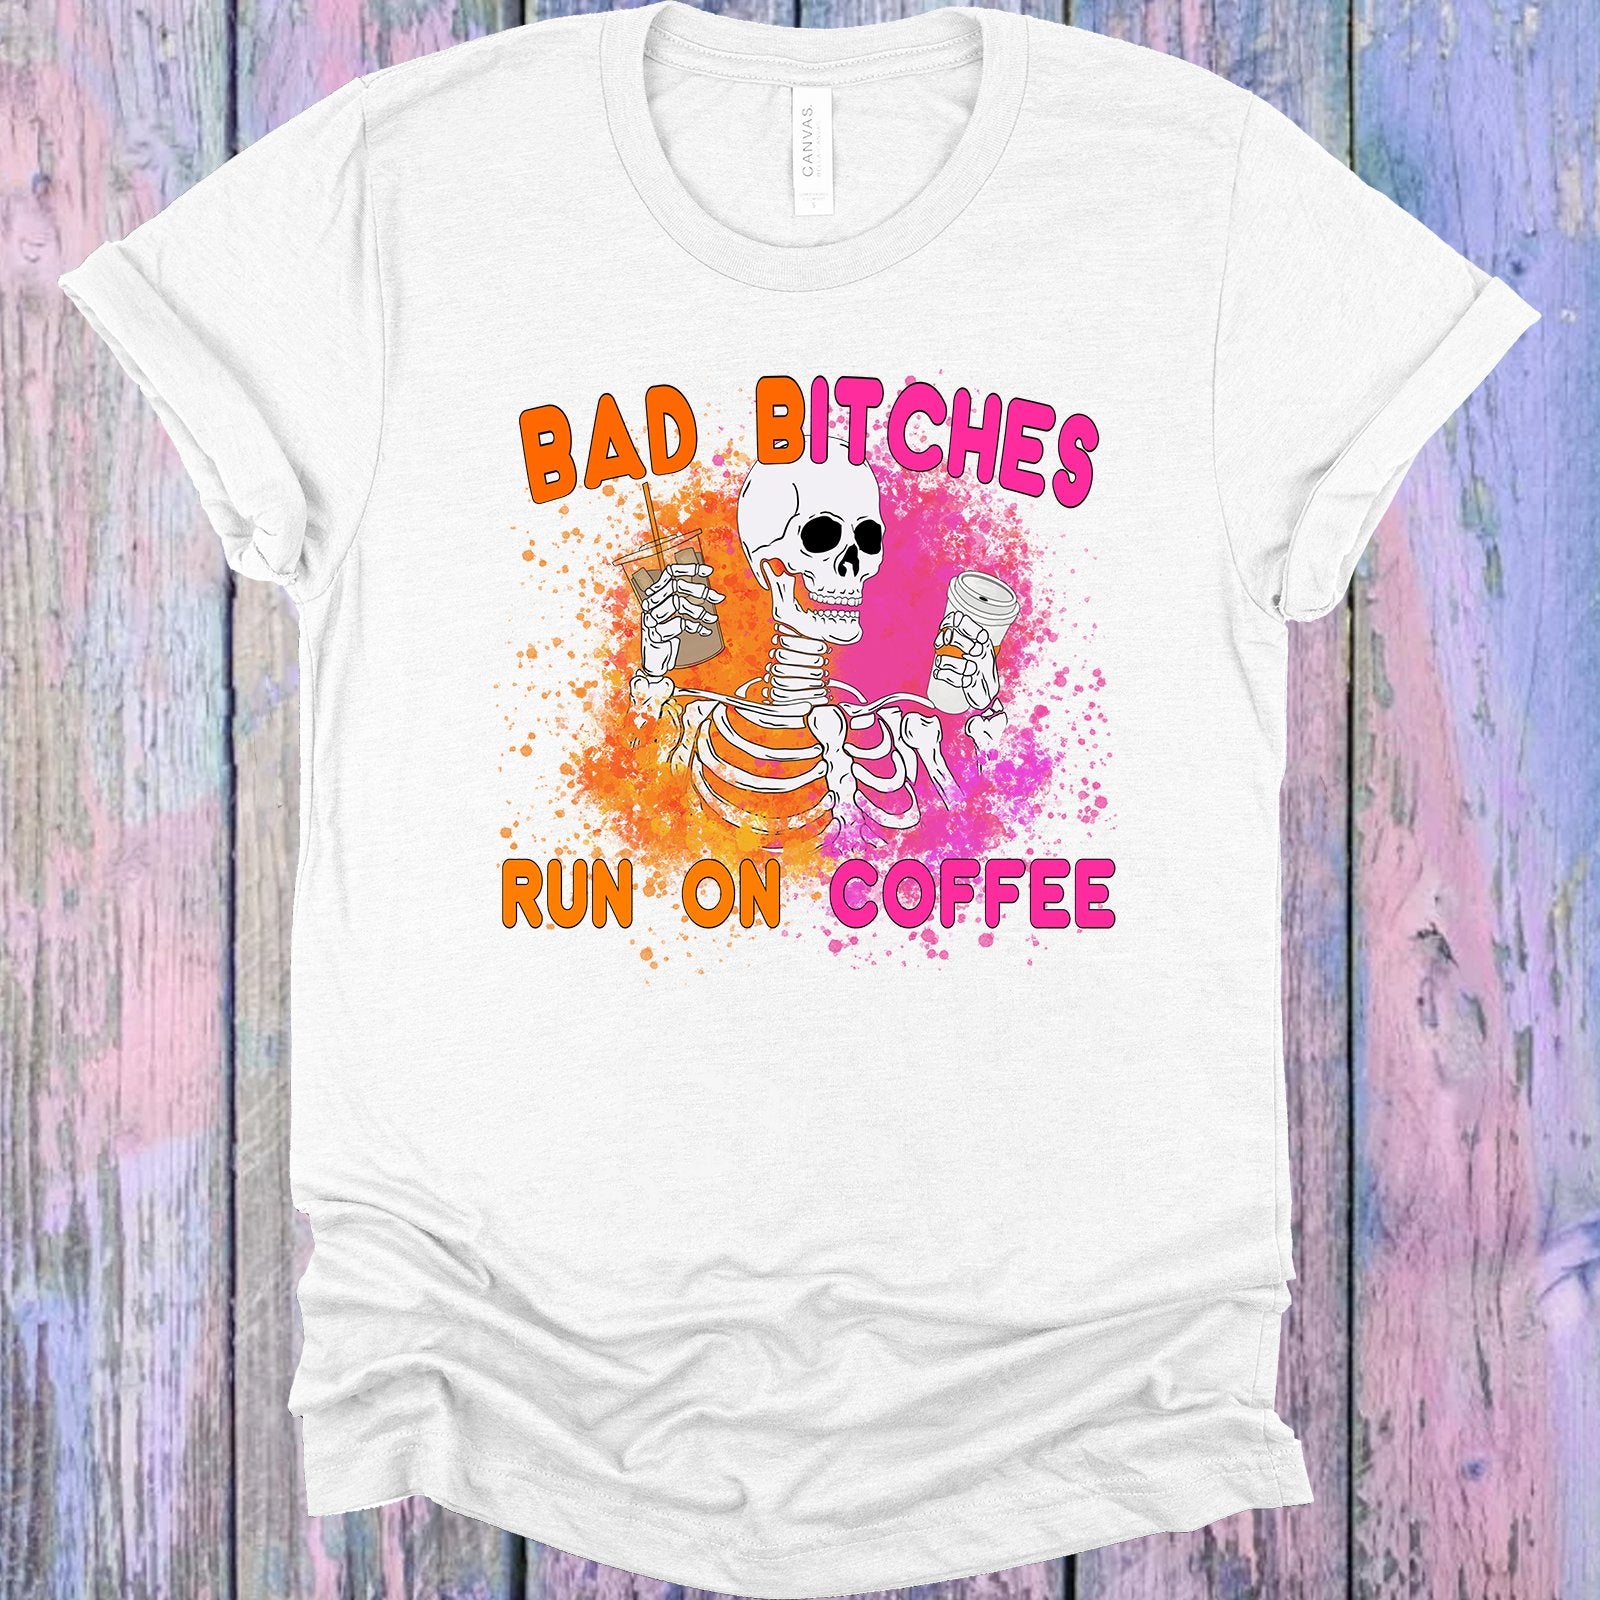 Bad B**ches Run On Coffee Graphic Tee Graphic Tee